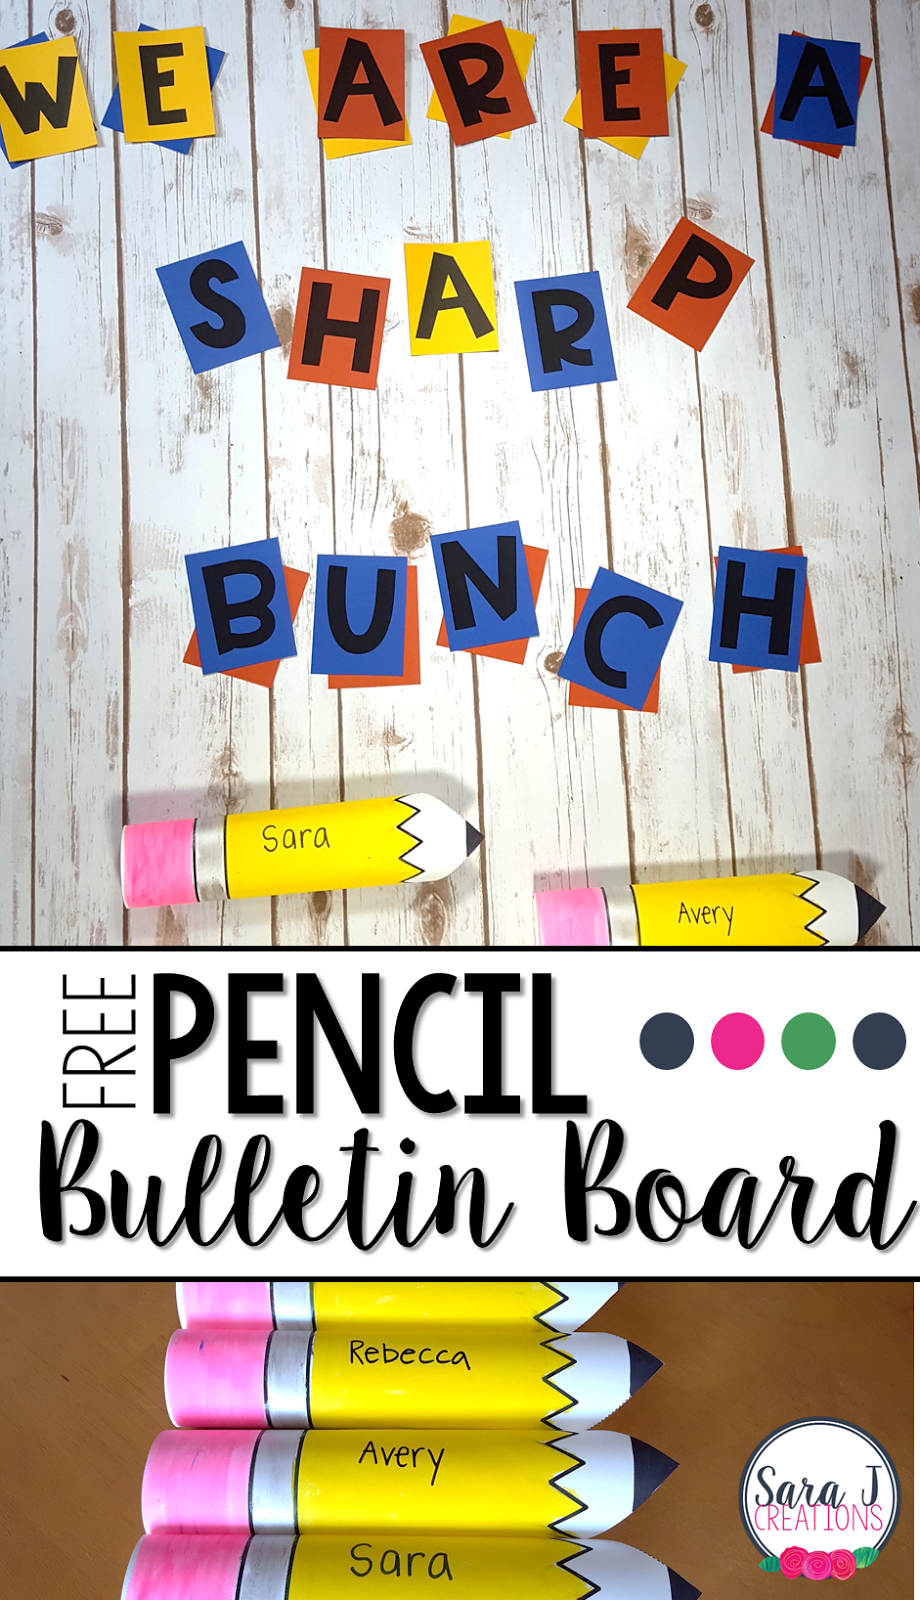 Pencil Bulletin Board